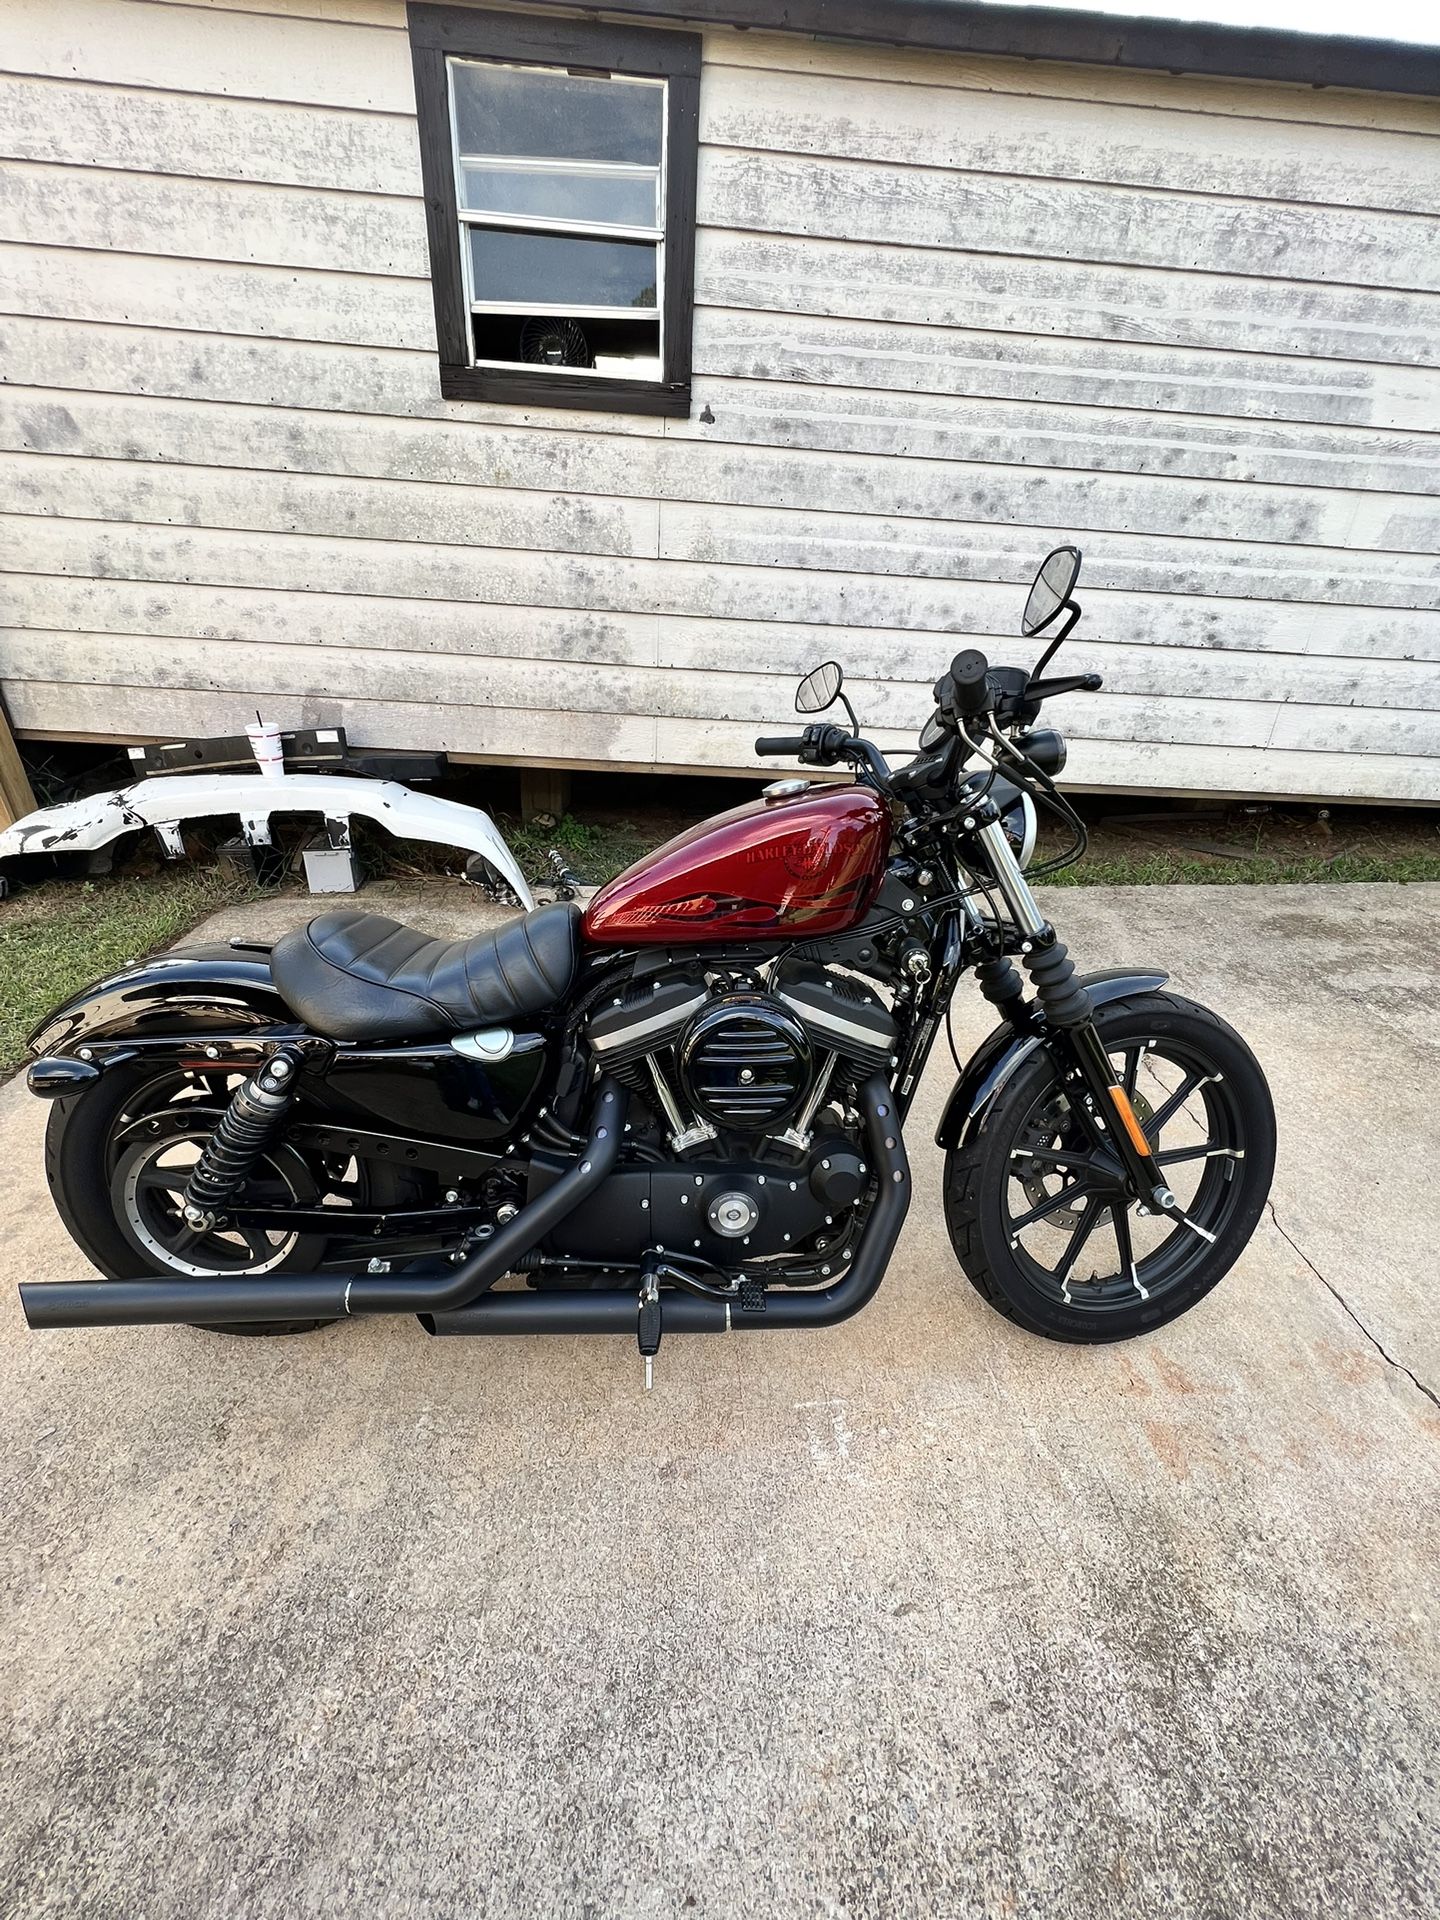 2017 Harley Davidson 883 iron